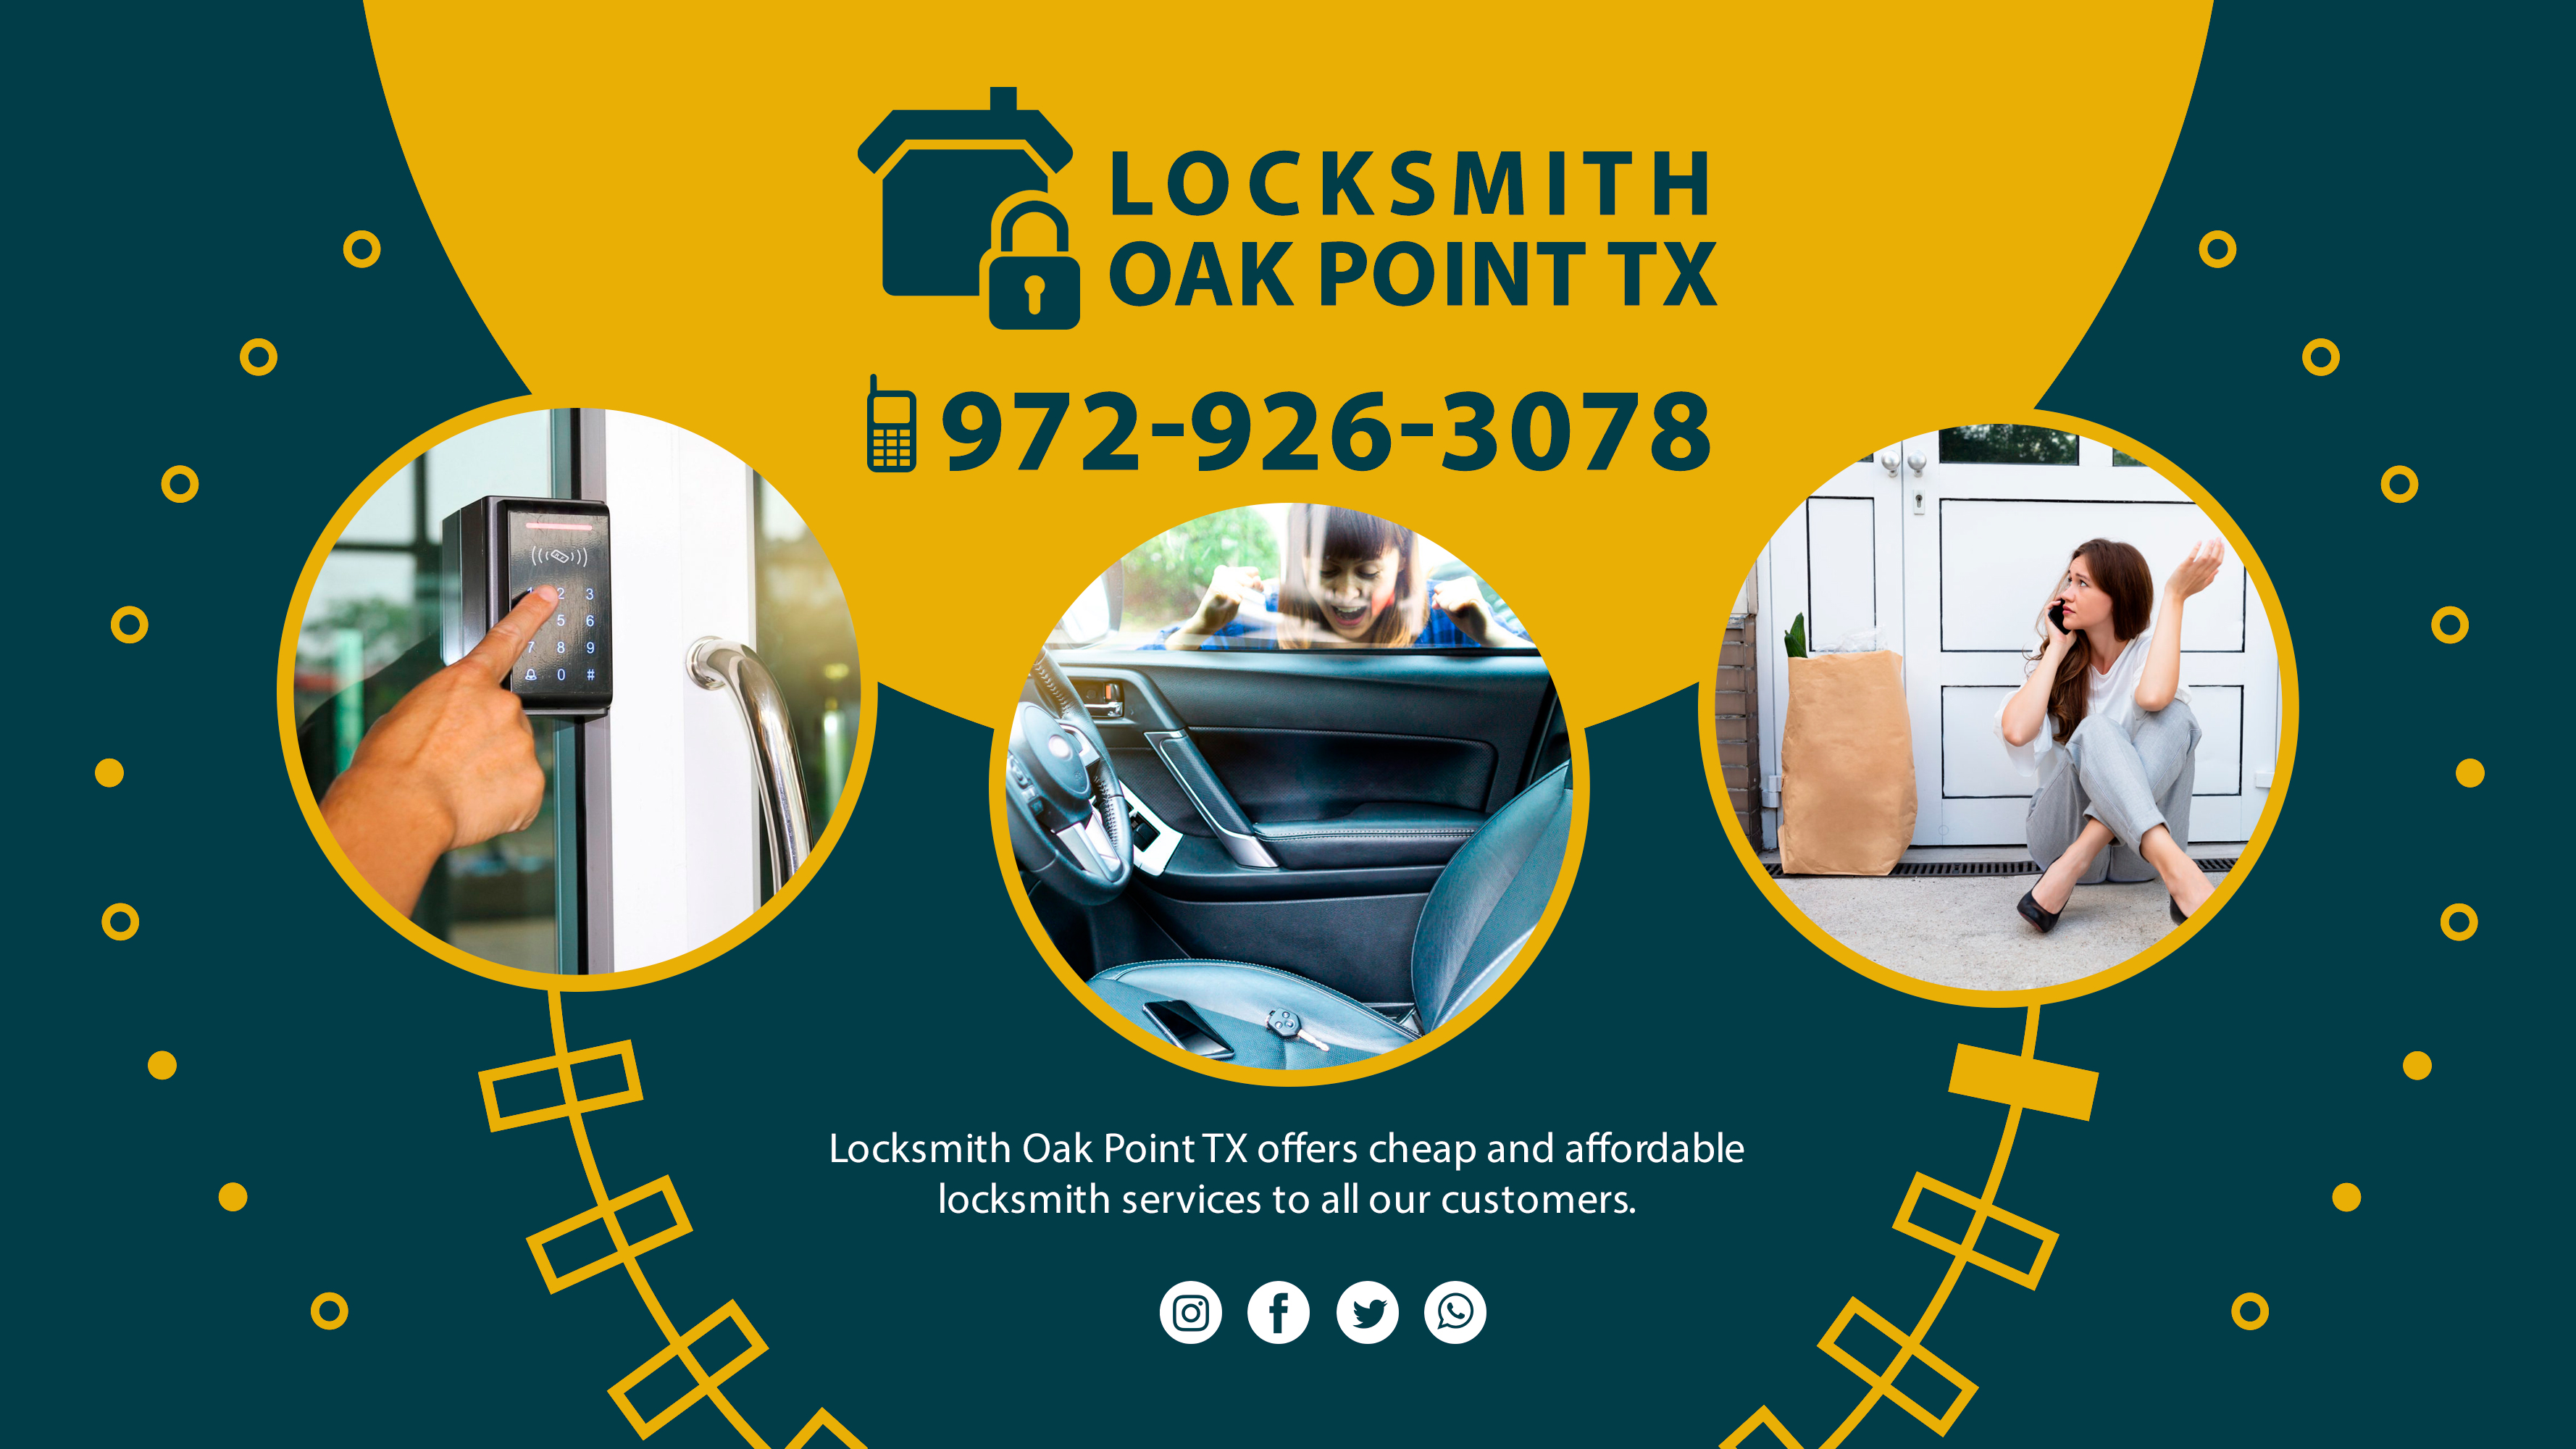 Locksmith Oak Point TX - Best Locks and Keys Service